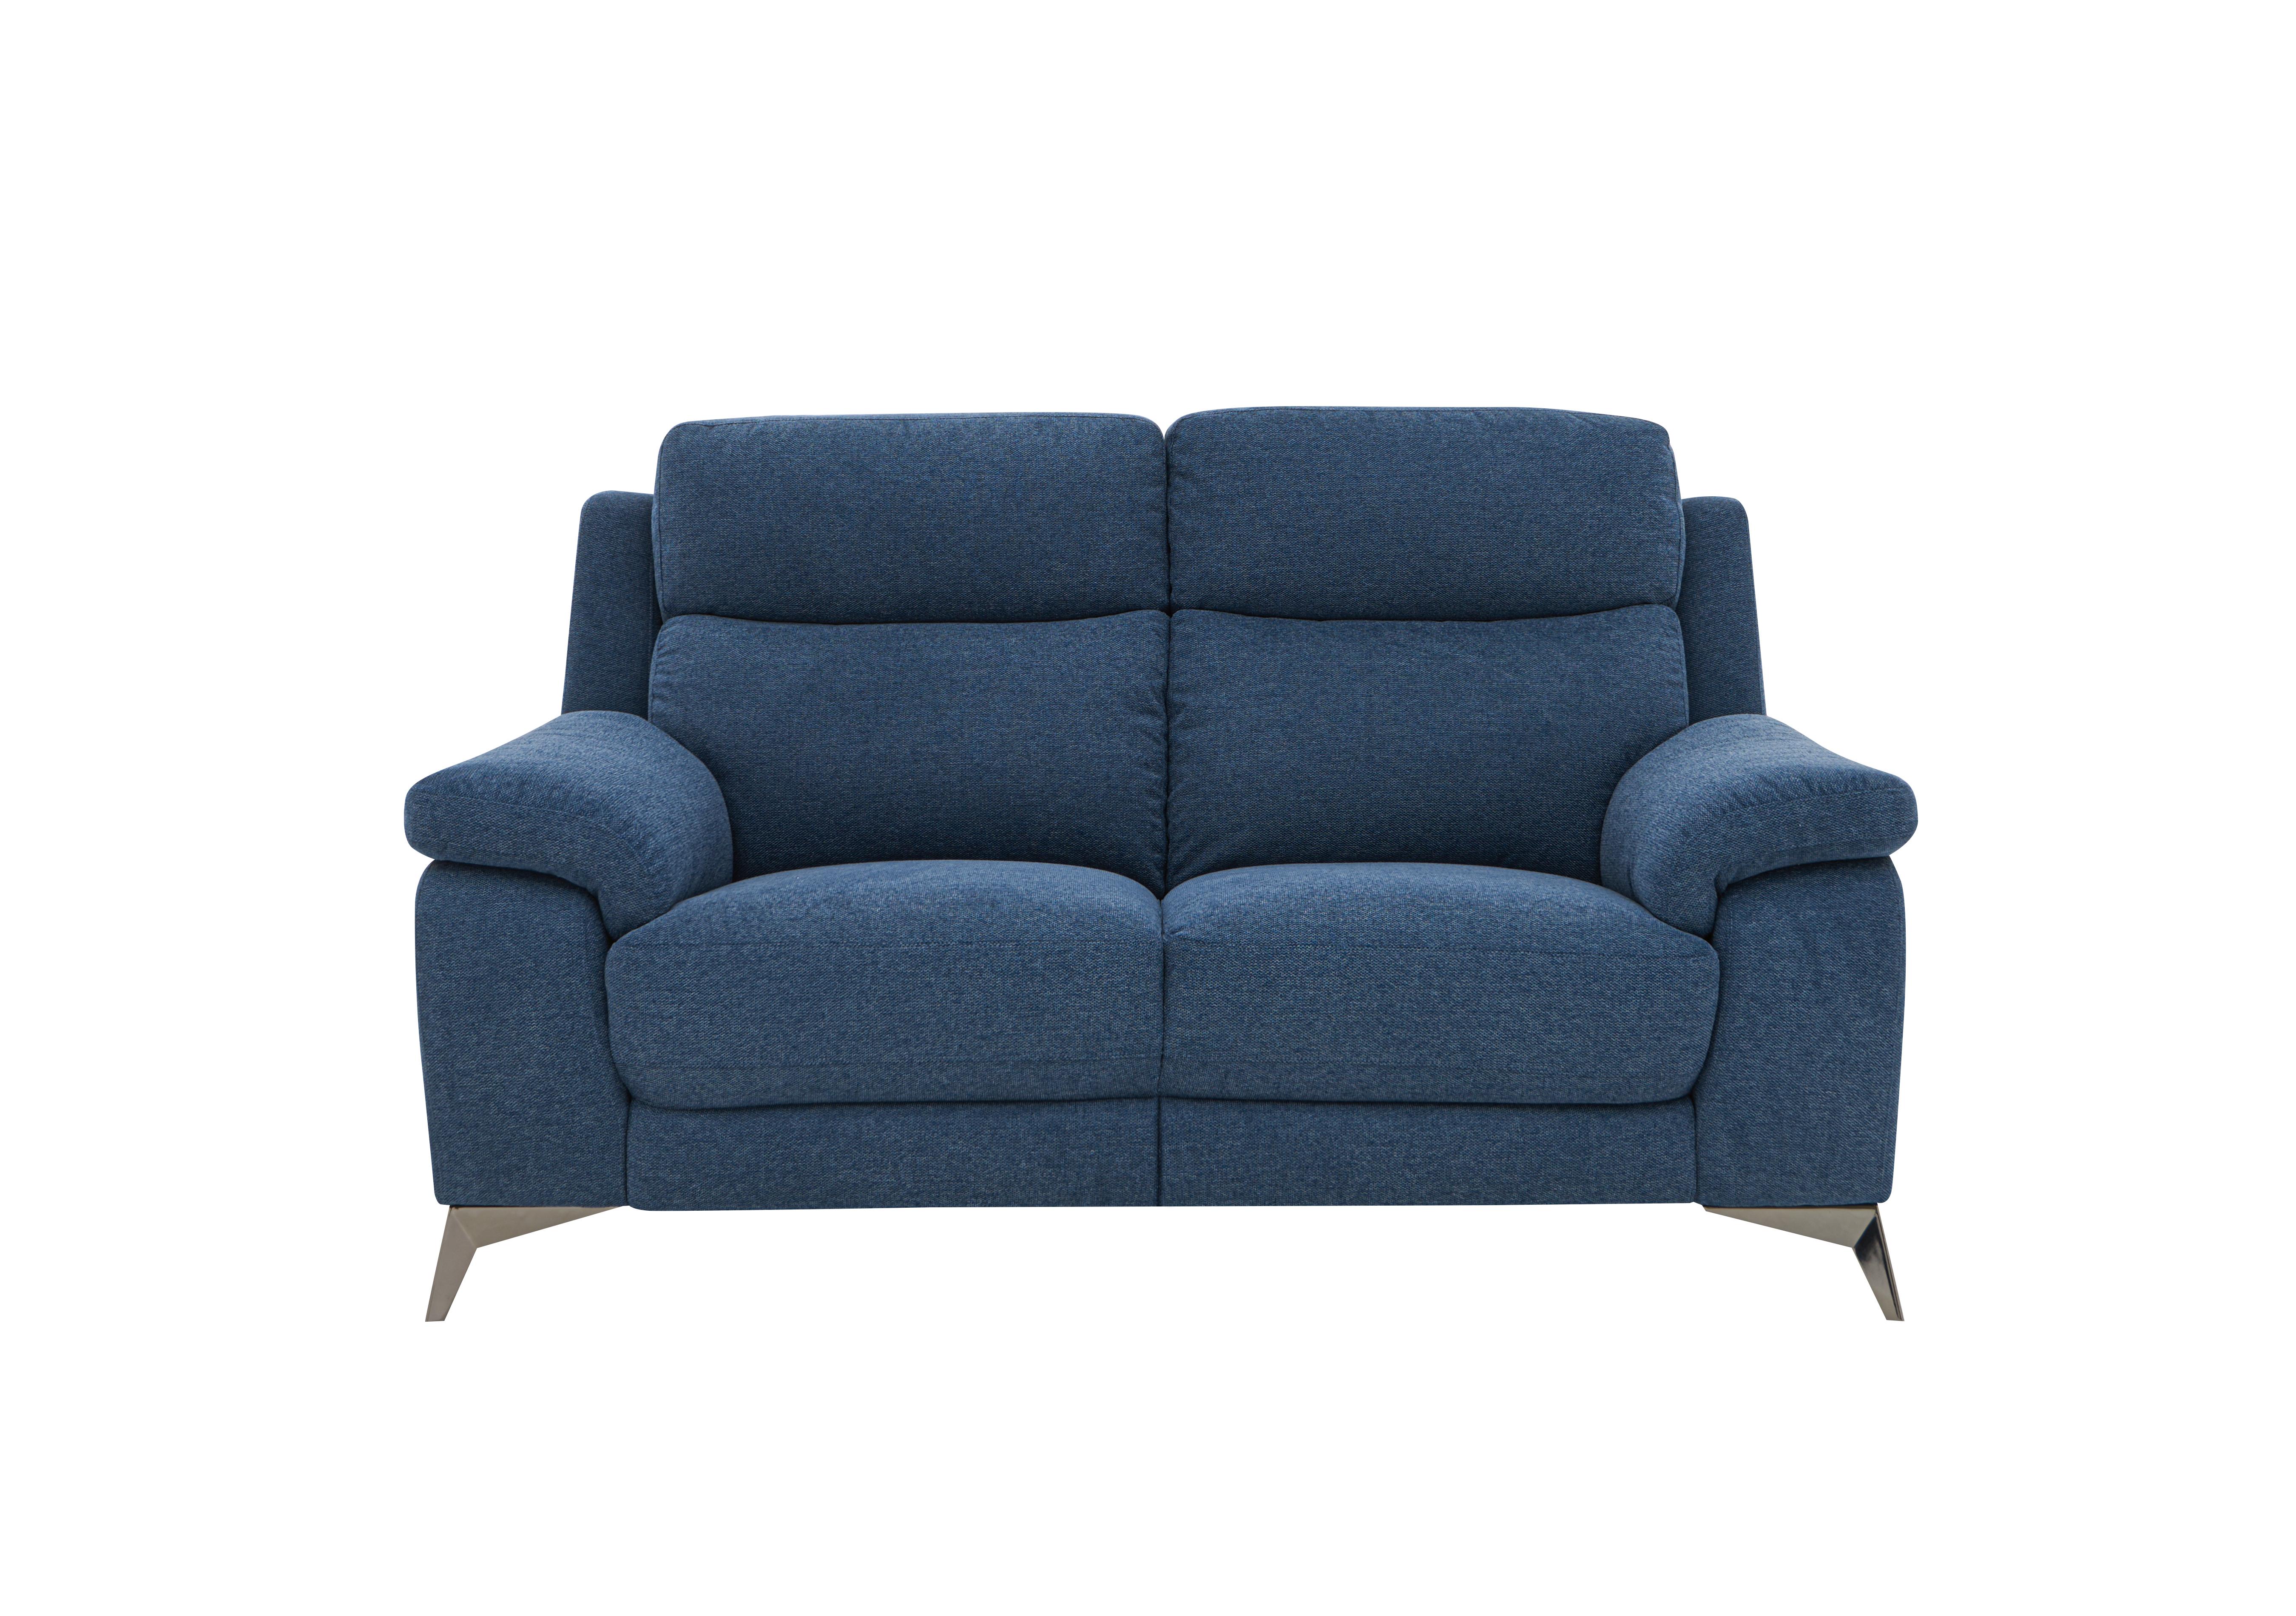 Missouri 2 Seater Fabric Sofa in Fab-Blt-R38 Blue on Furniture Village